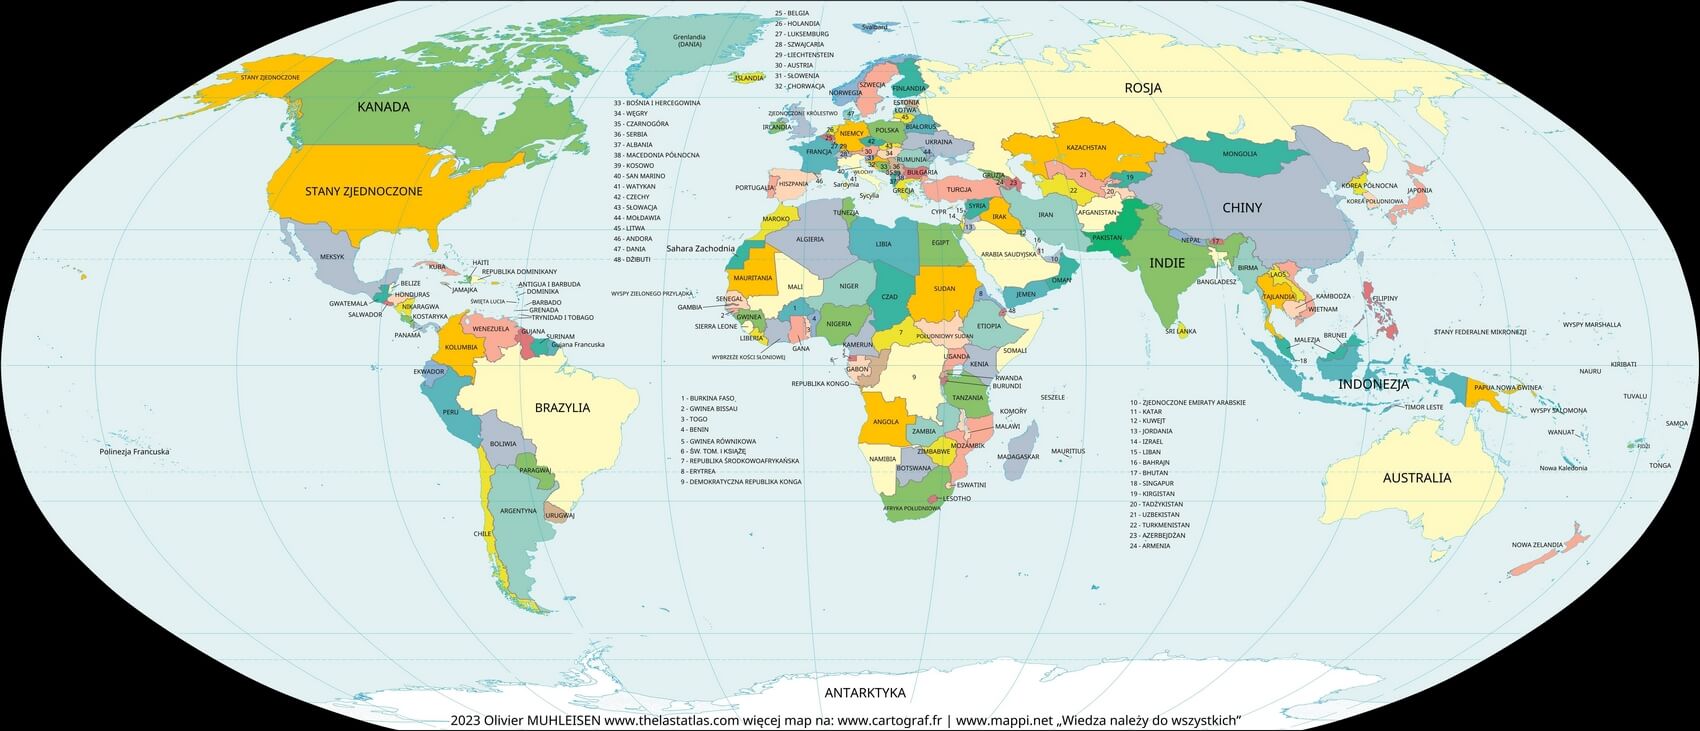 Mapa mundi com países em polonês